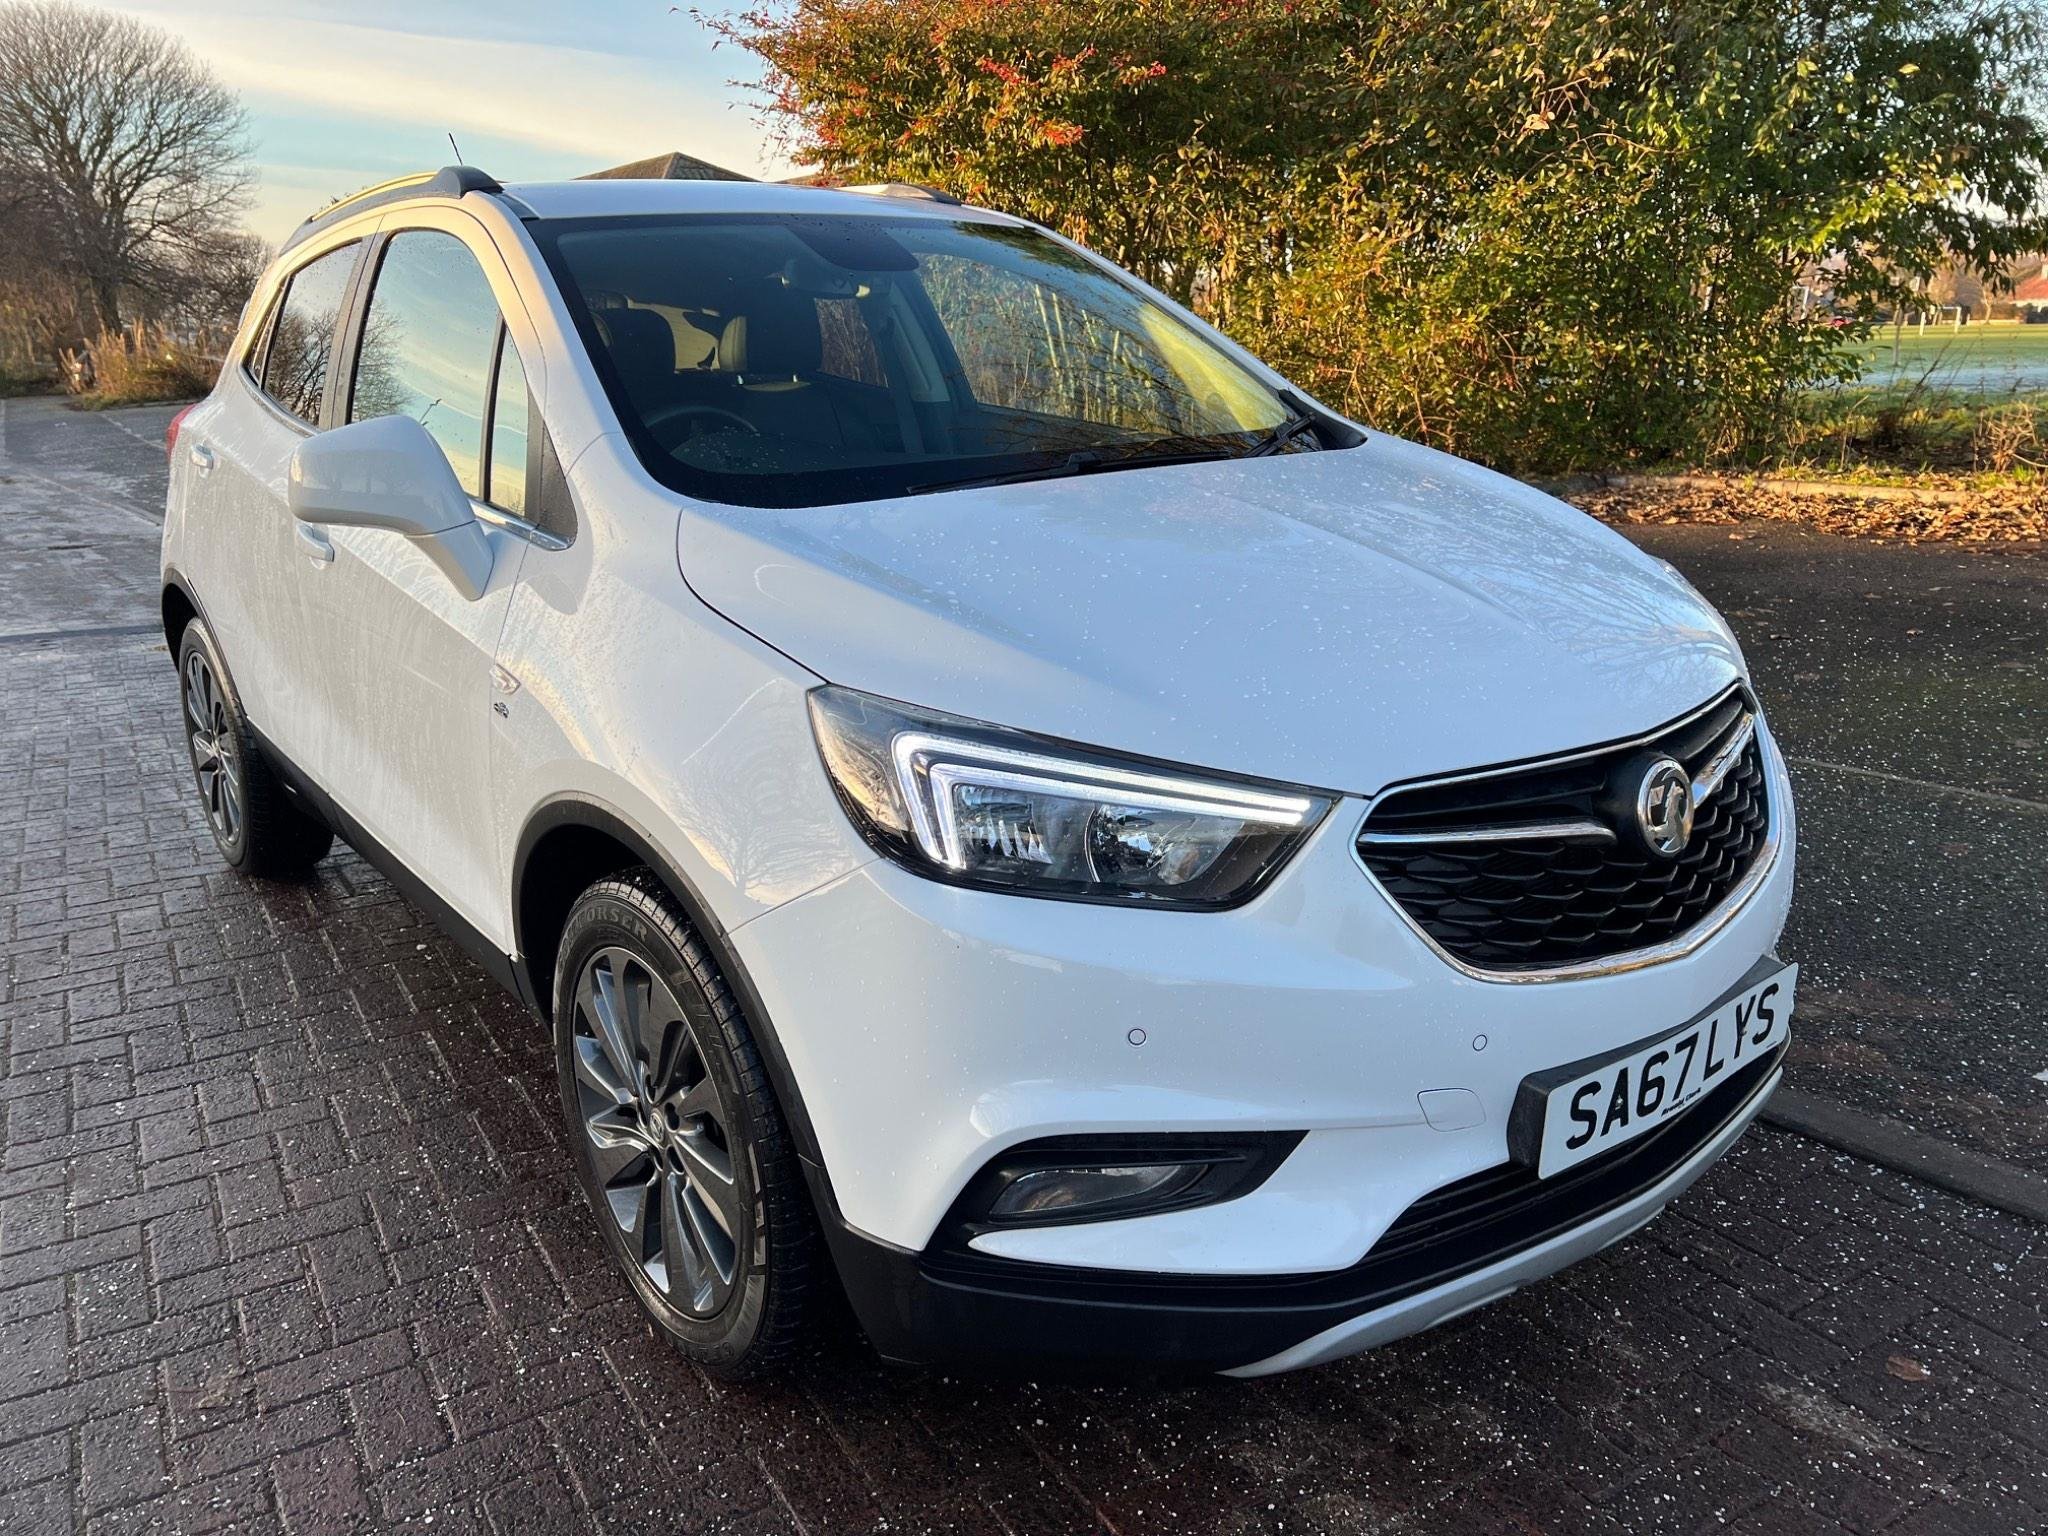 Opel Mokka X (2017) - pictures, information & specs